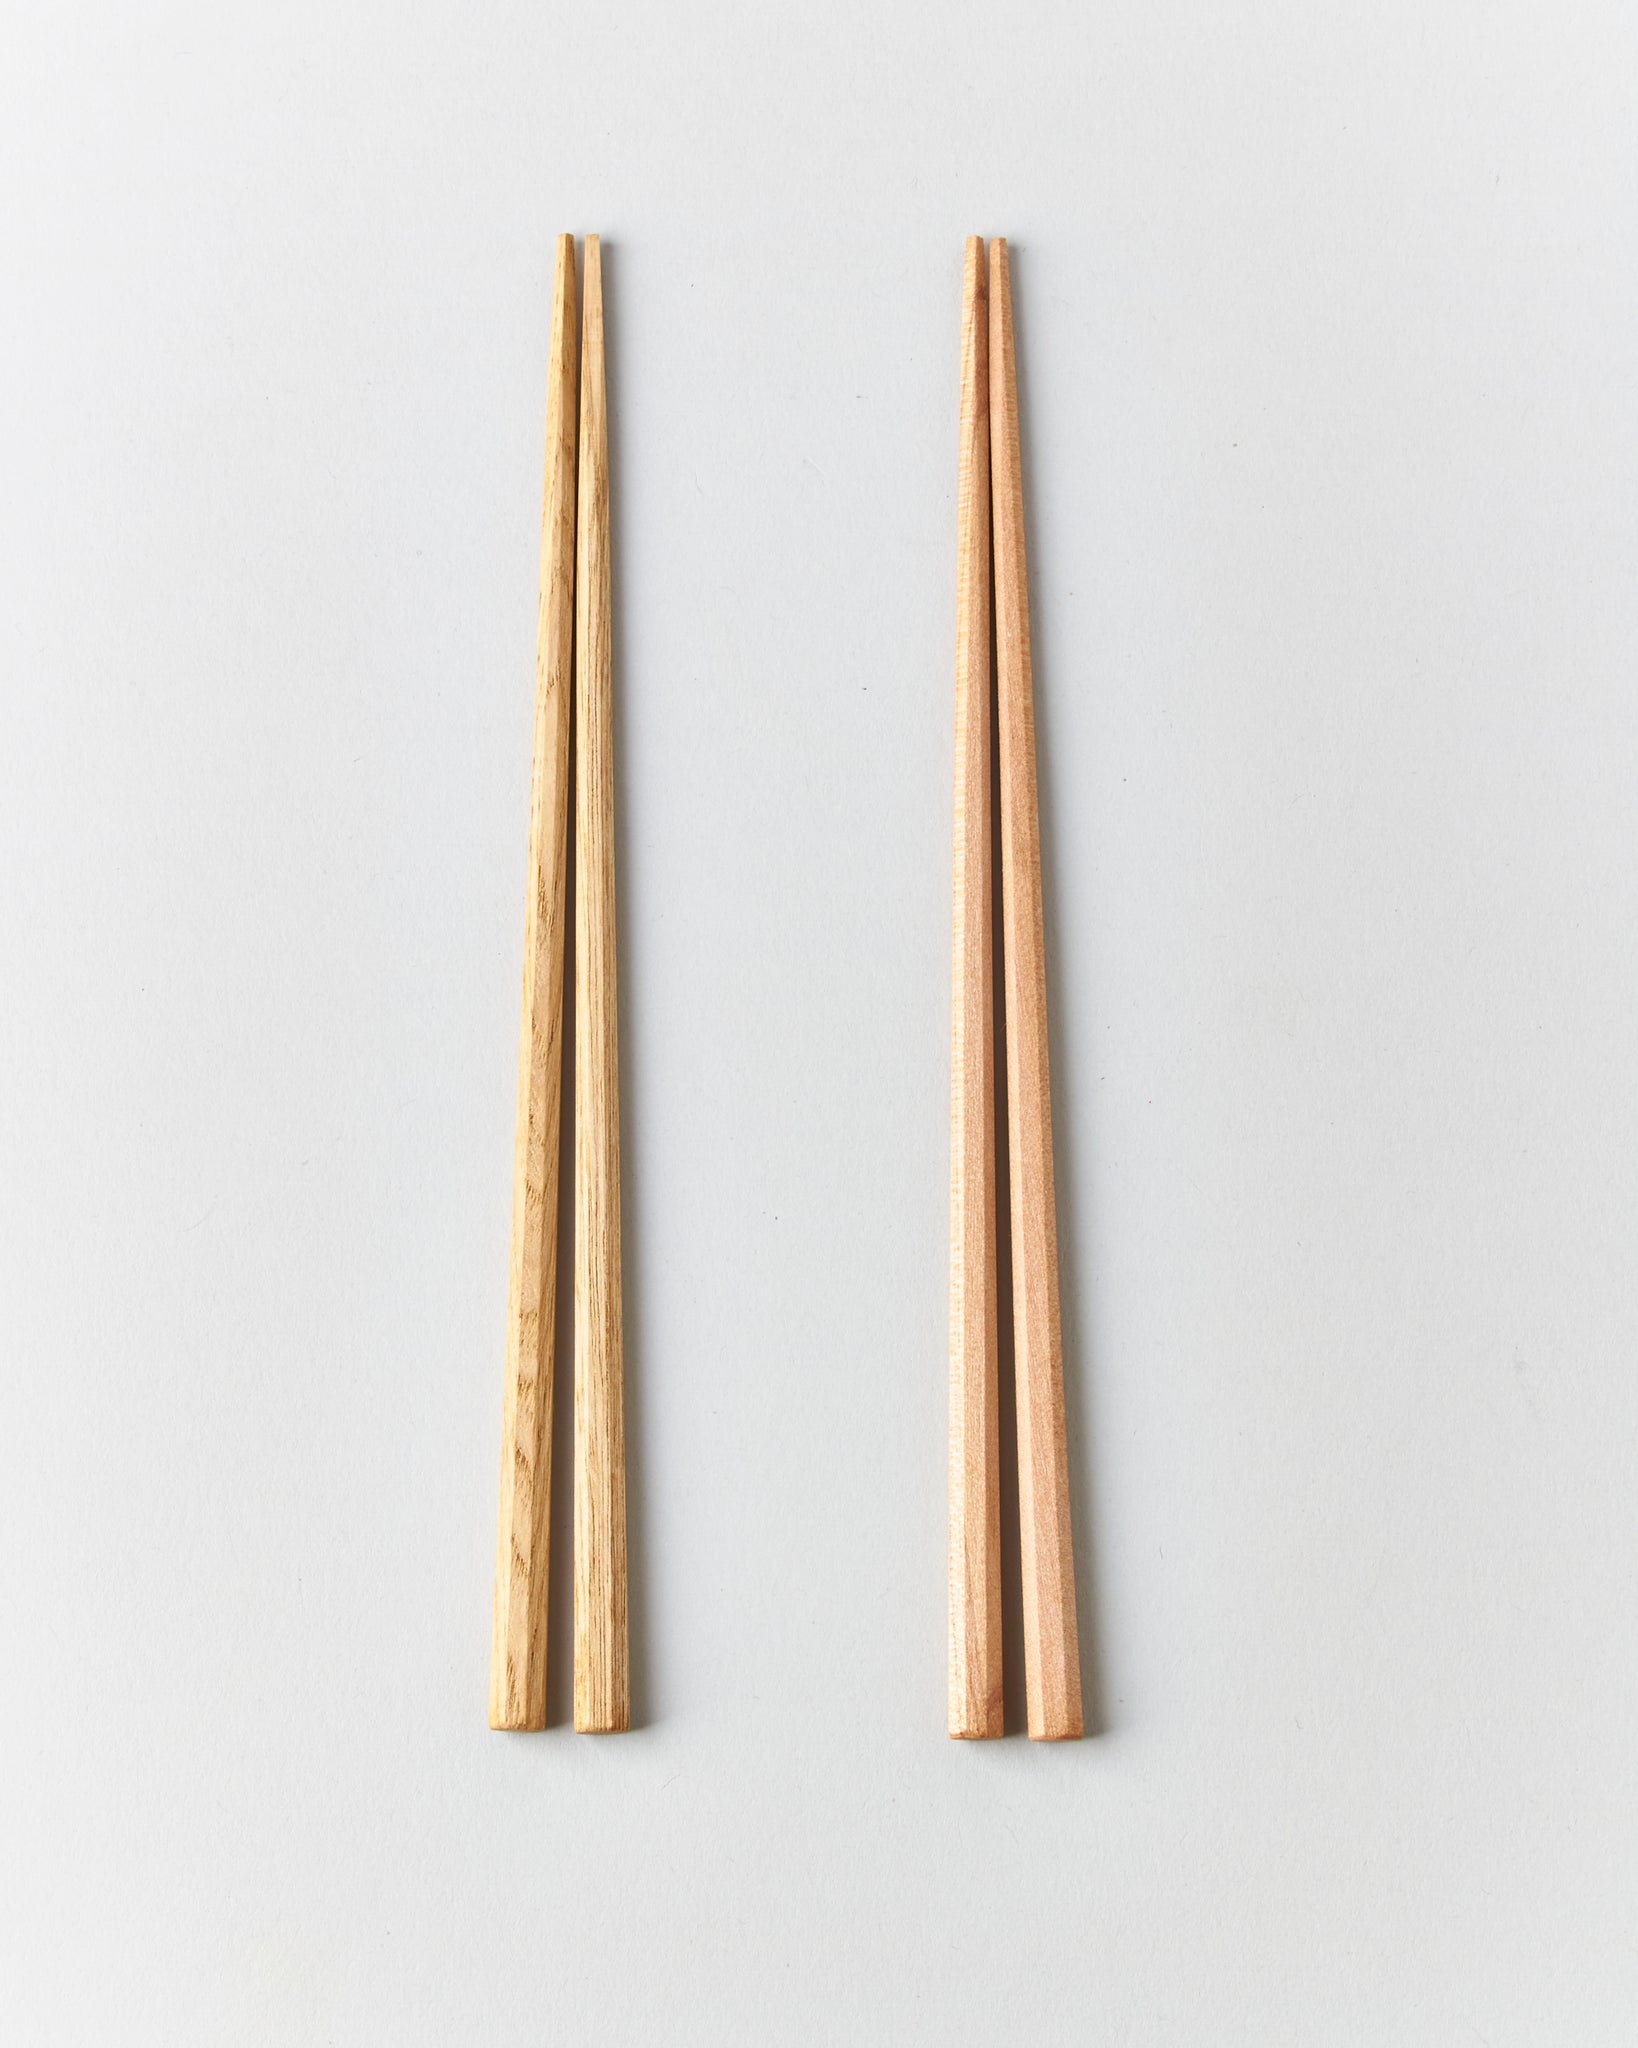 Tetoca Chopsticks in Variety of Woods